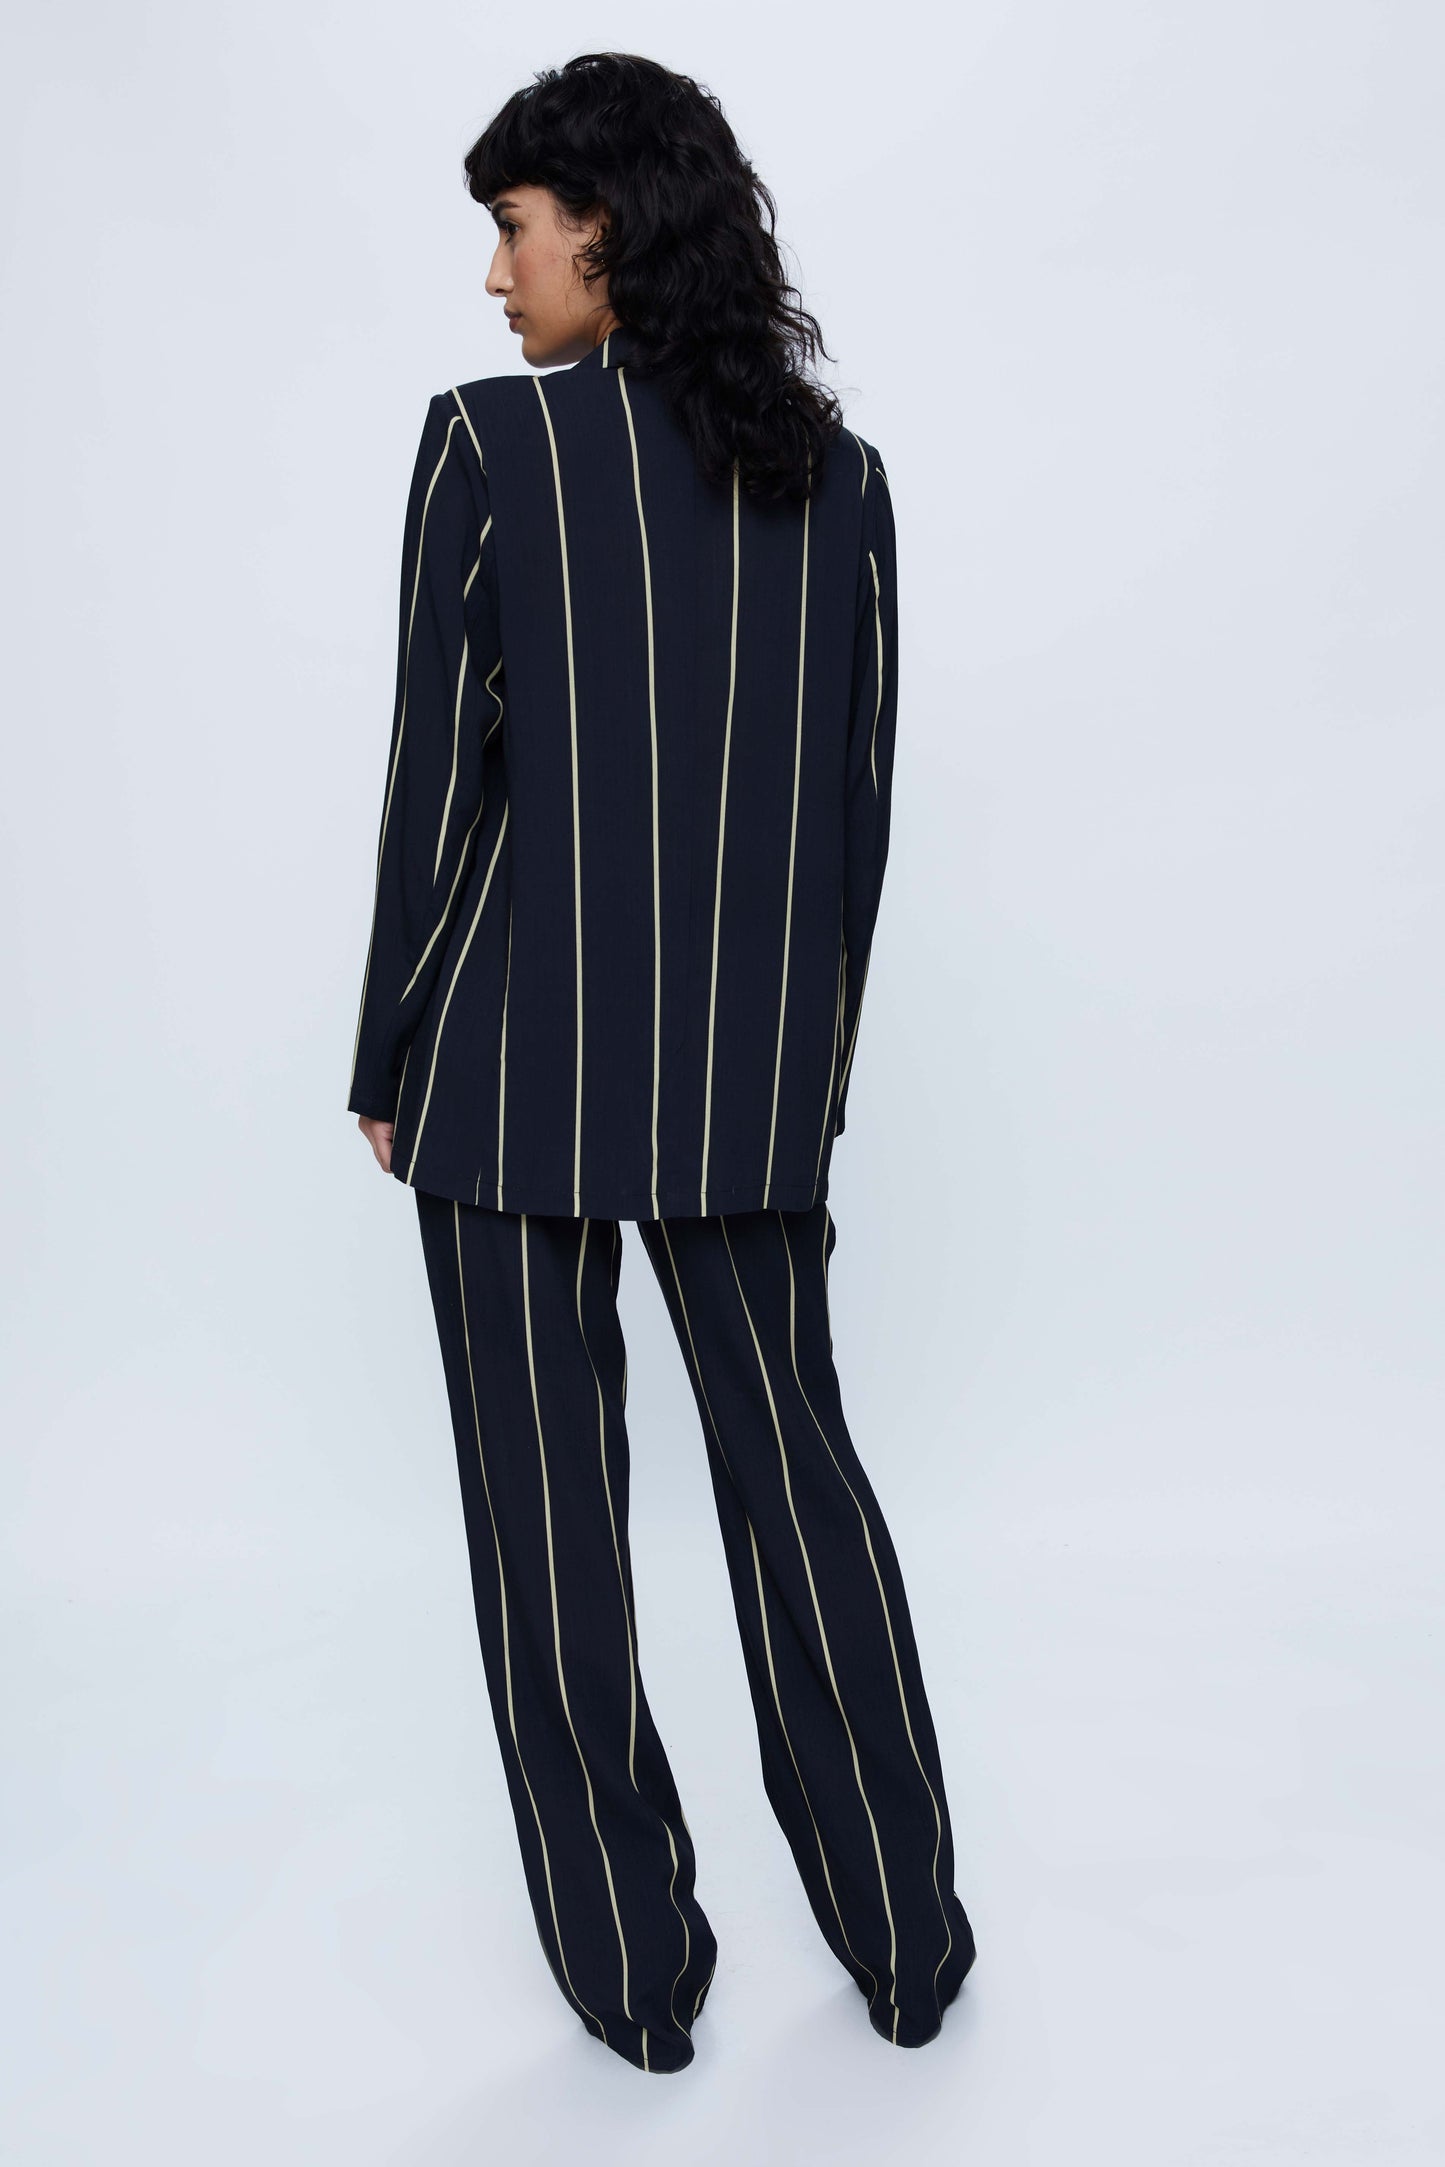 Black striped suit blazer